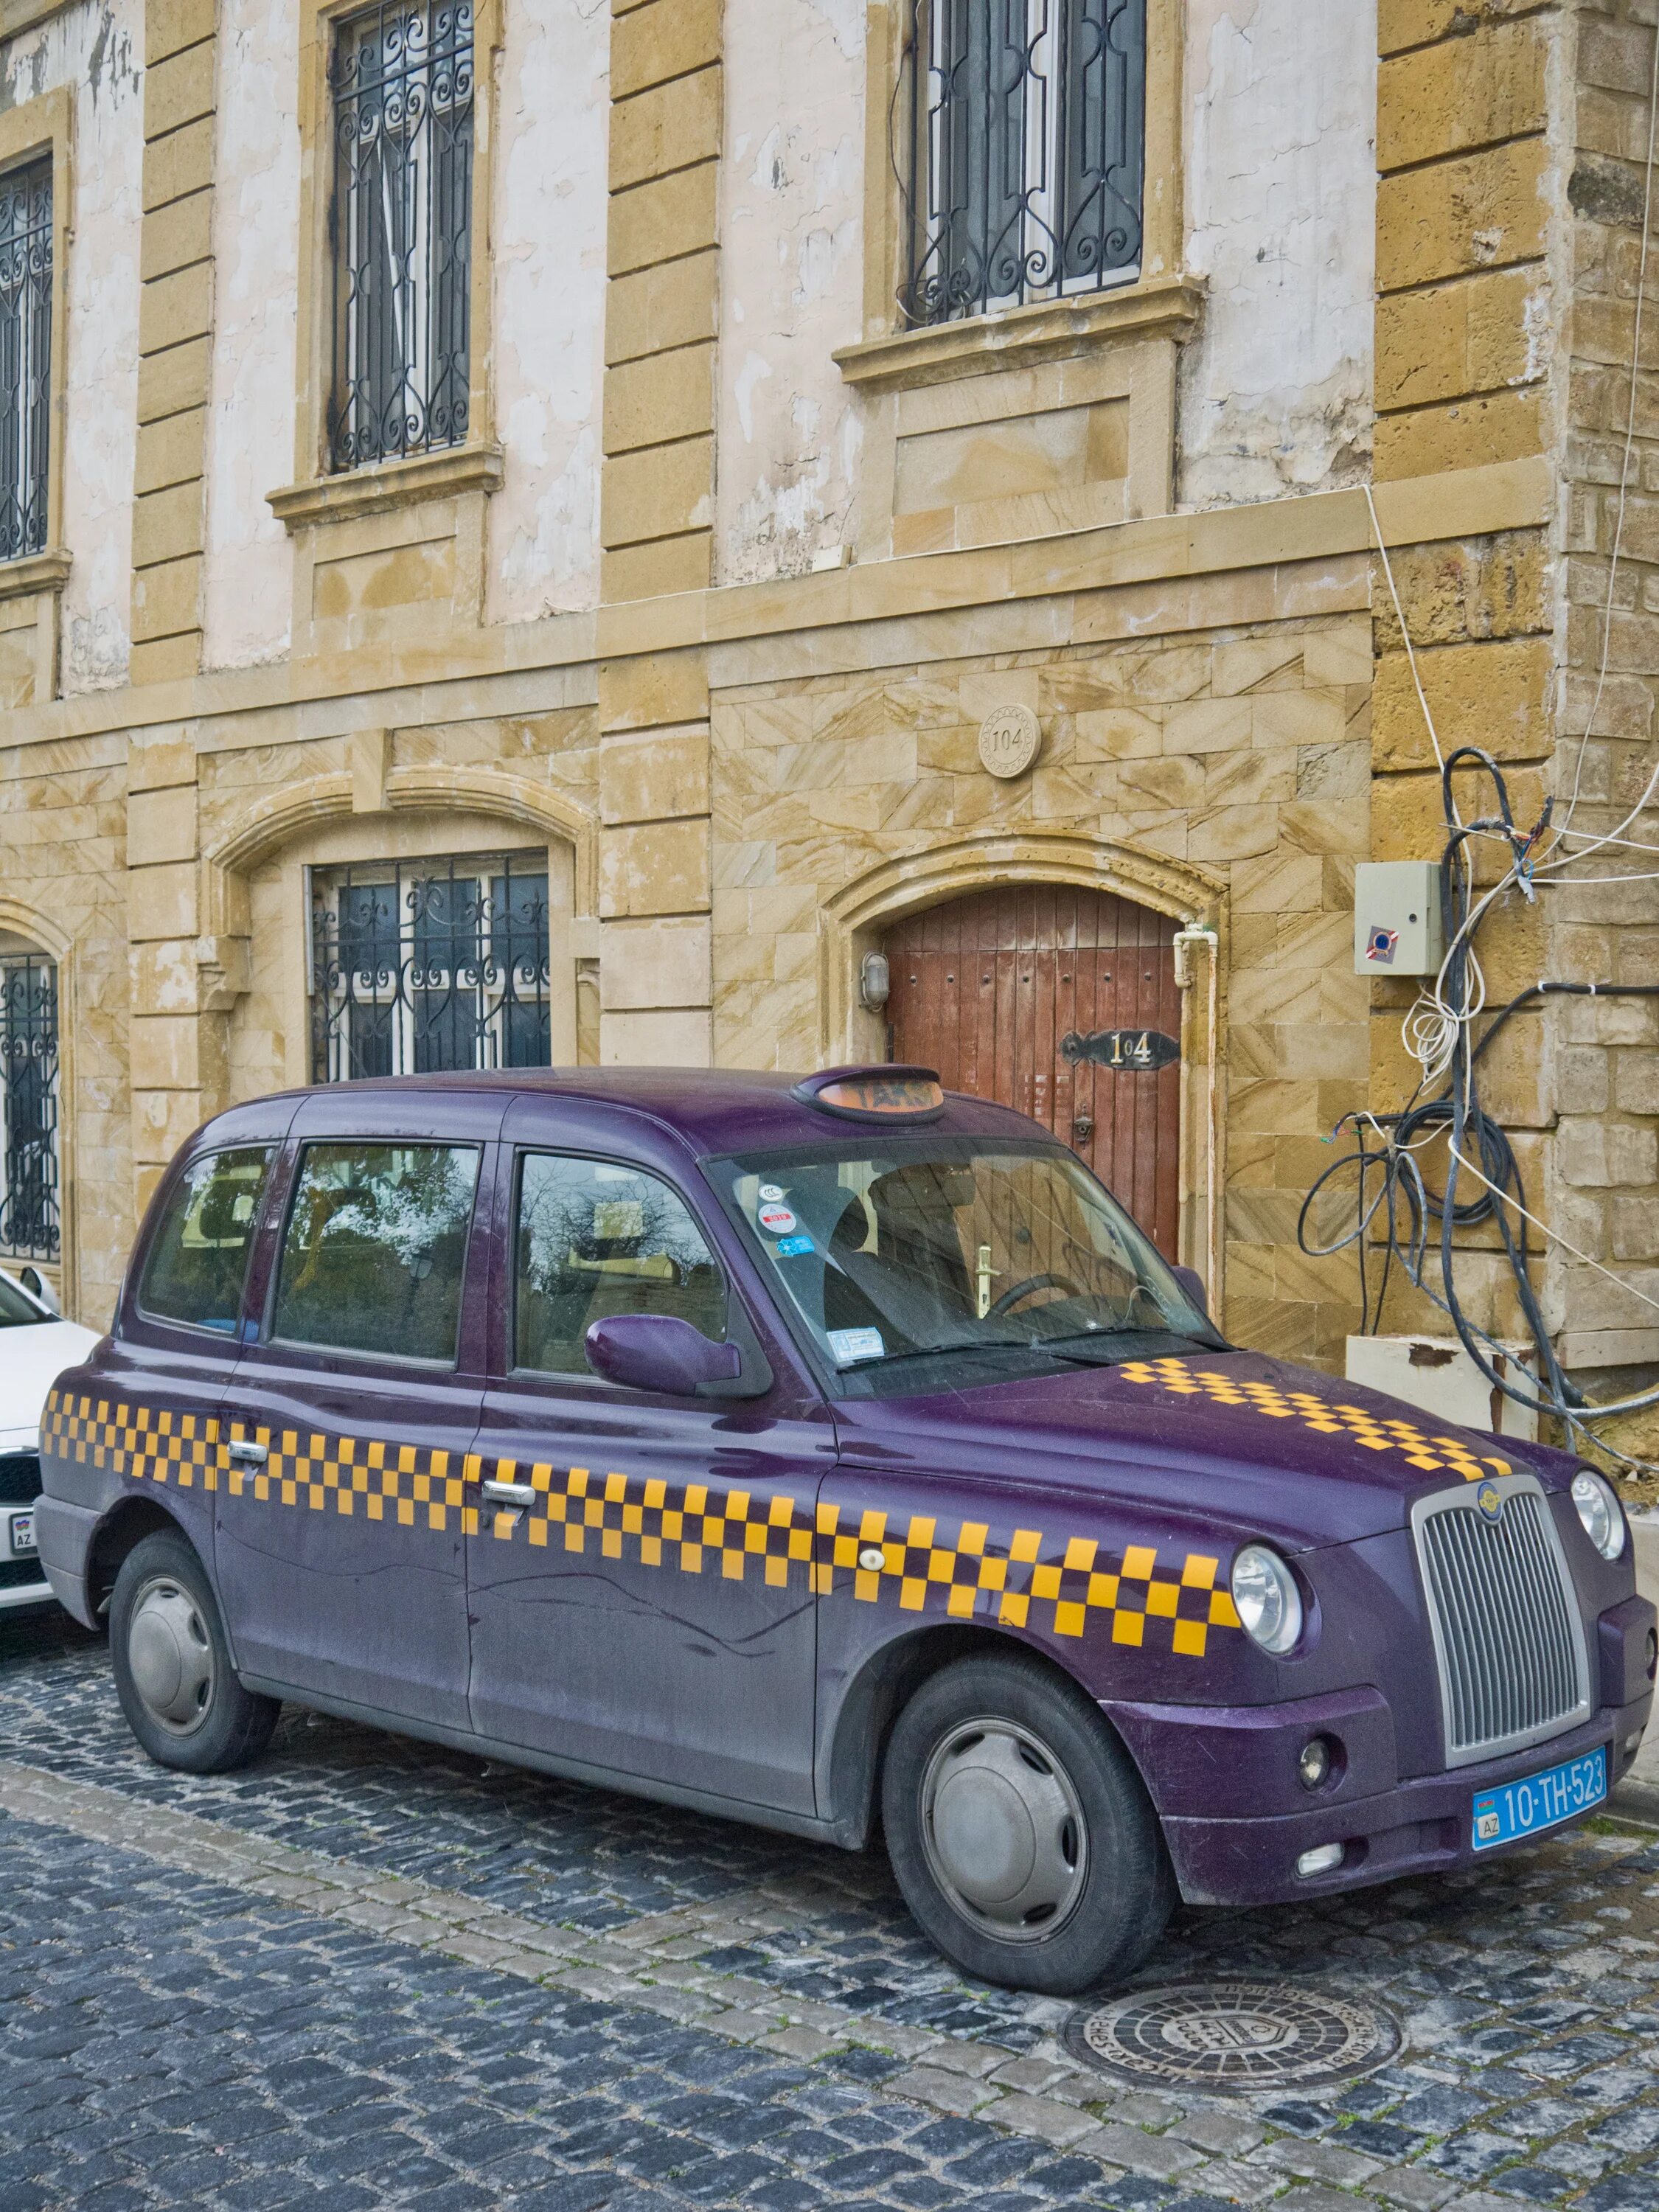 Авто баку азербайджан. Такси в Баку баклажан. КЭБ В Баку. Такси в Баку кэбы. Бакинское такси.